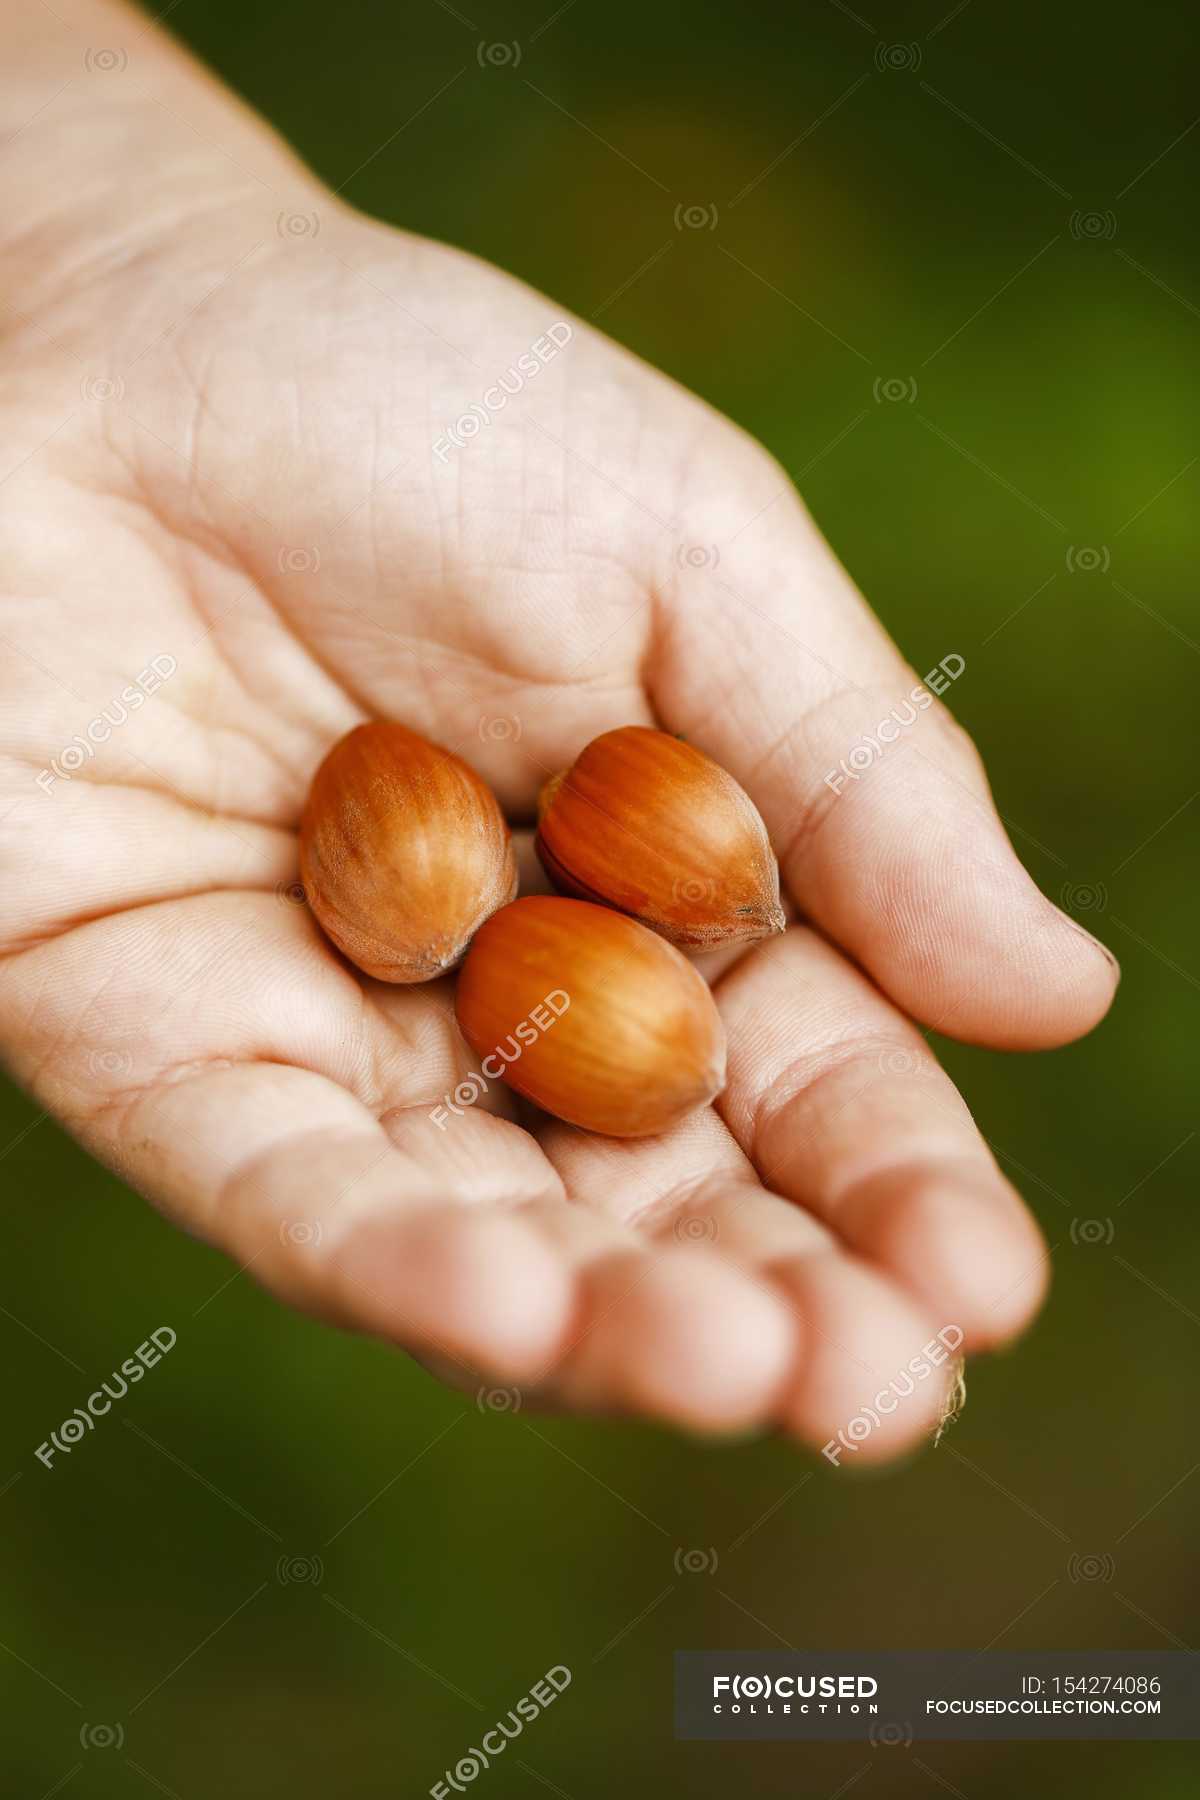 Hand holding fresh picked hazelnuts — Stock Photo | #154274086